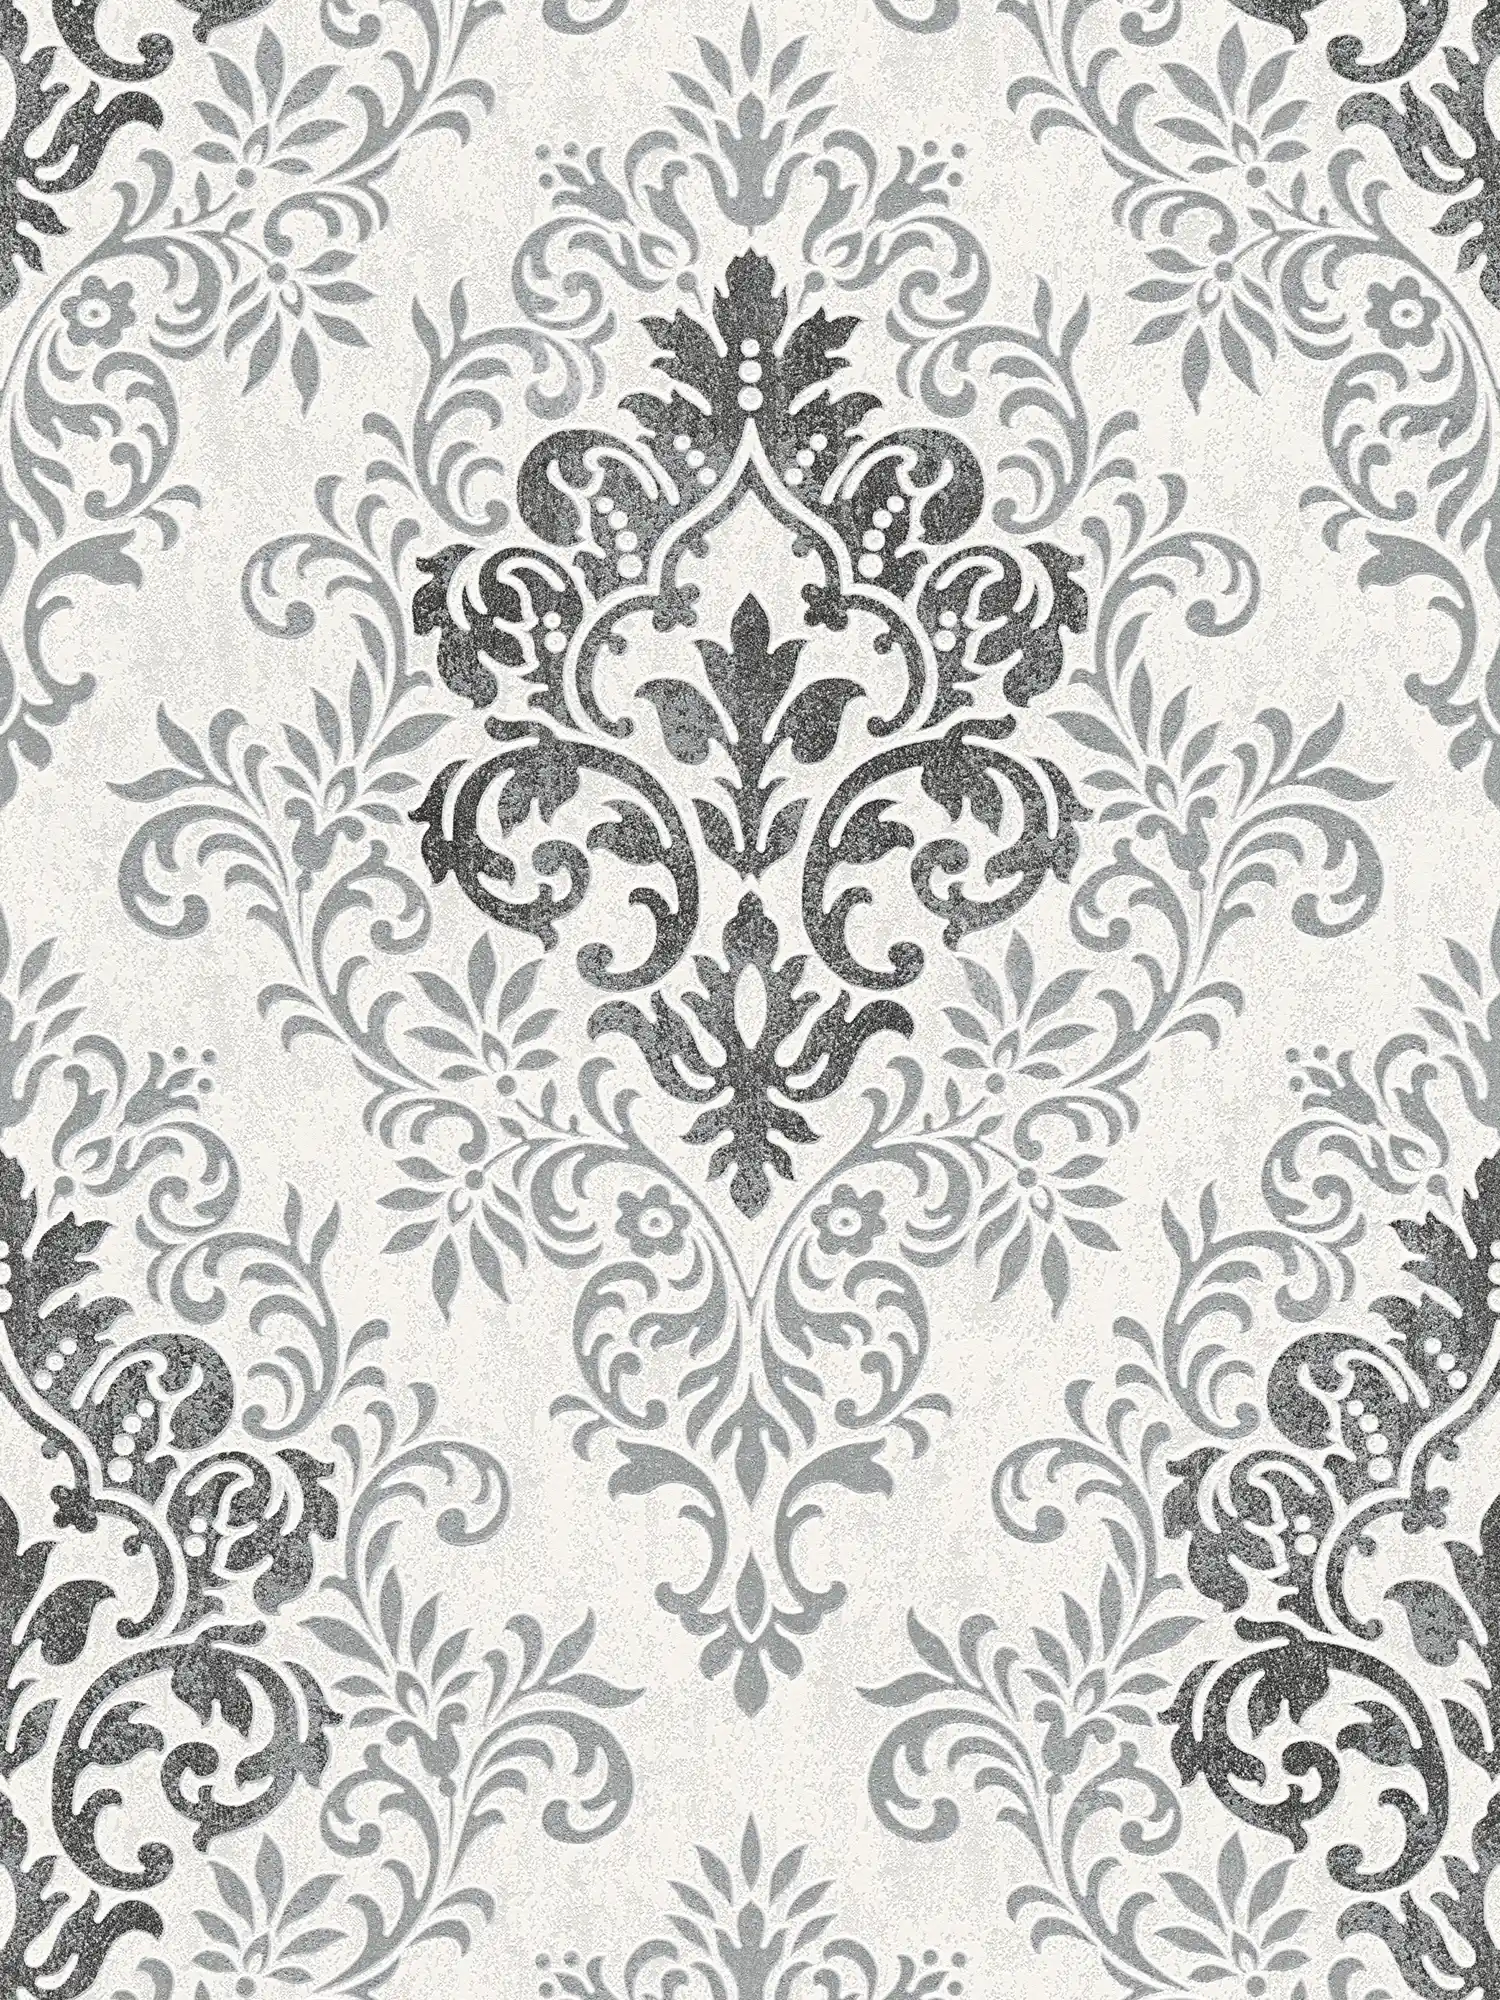 Baroque wallpaper with metallic ornaments - grey
